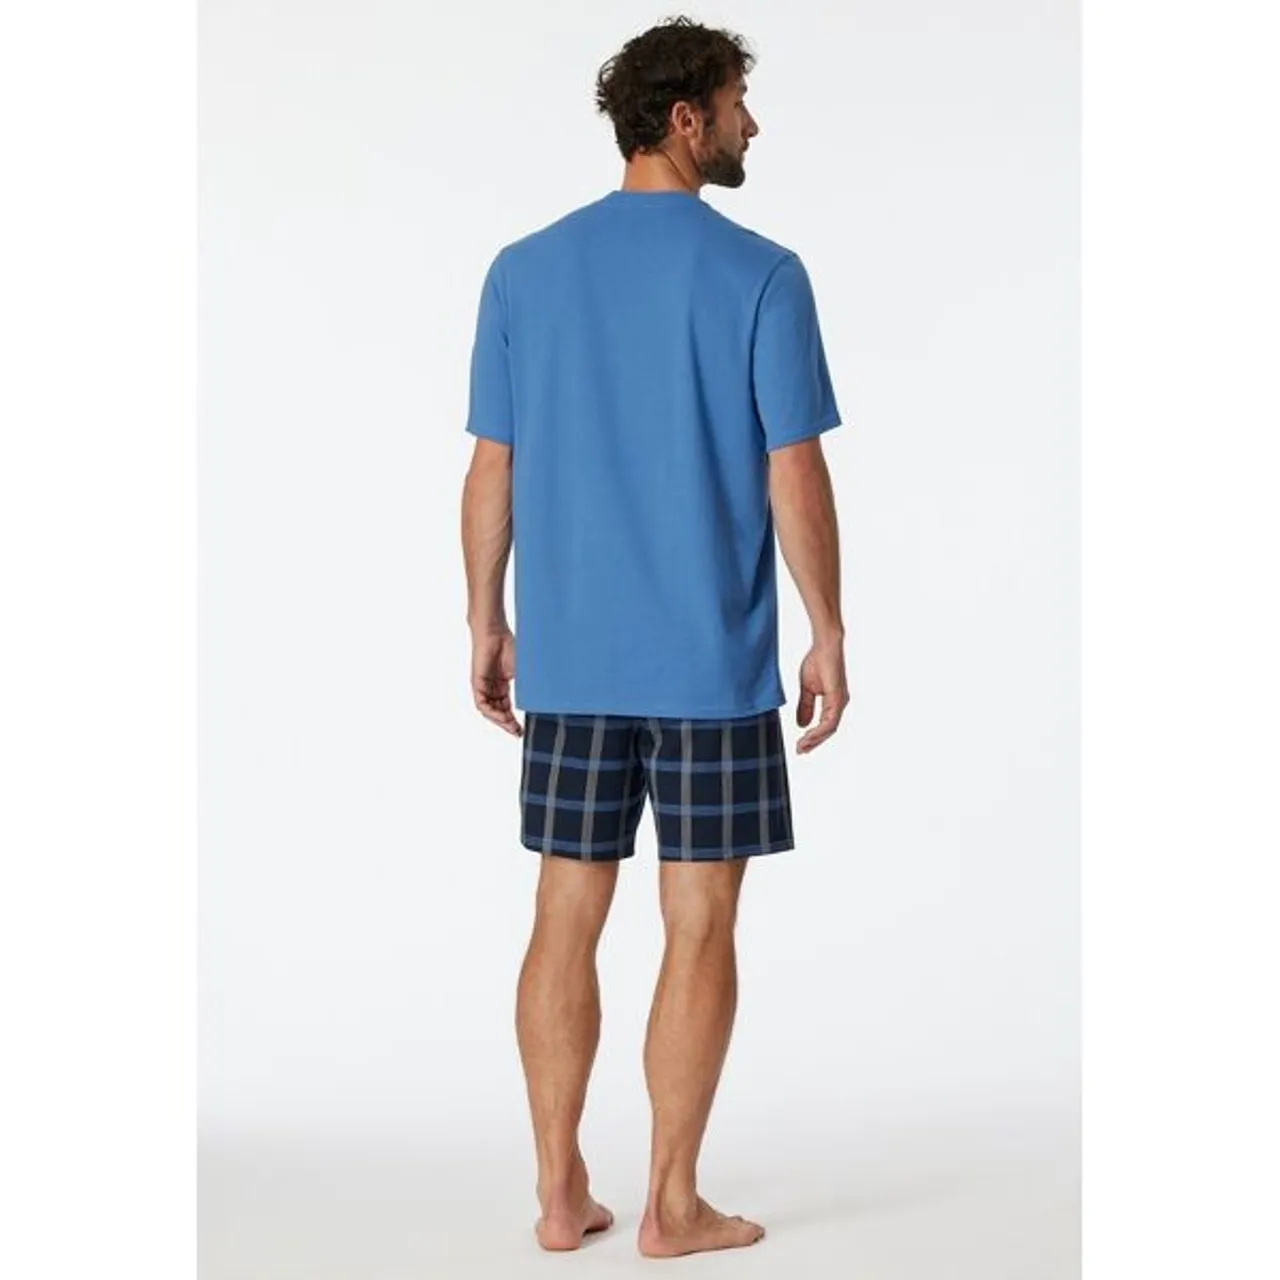 Shorty SCHIESSER ""Comfort Nightwear"" Gr. 60 (4XL), blau (atlantikblau) Herren Homewear-Sets Pyjamas